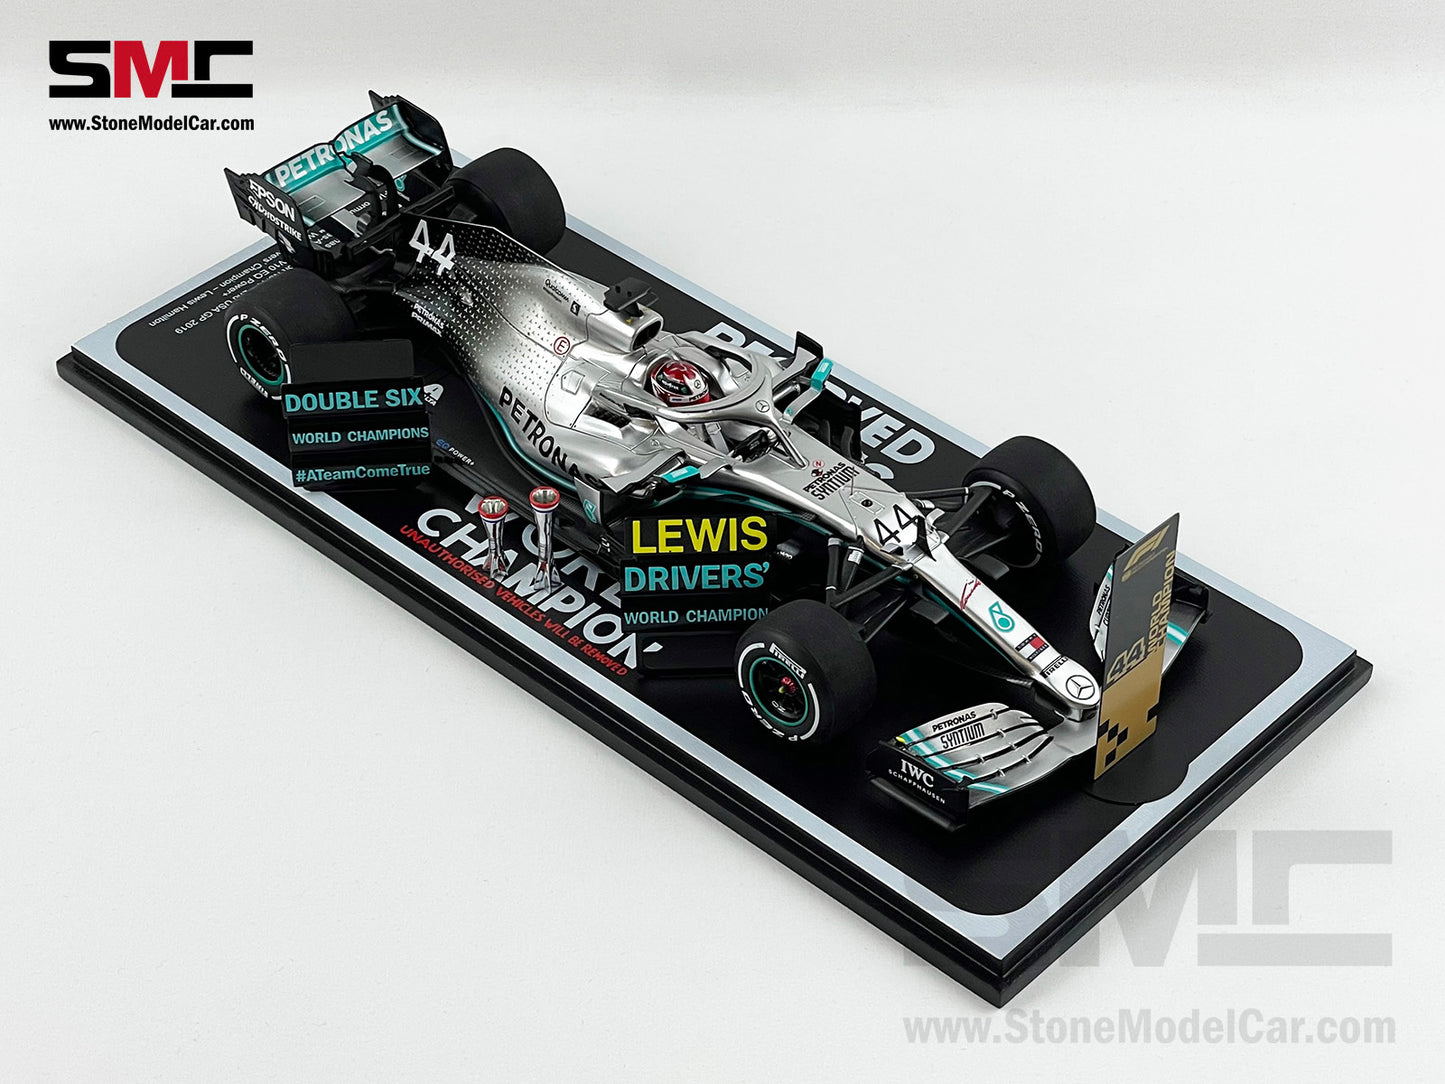 2019 6x World Champion Mercedes F1 W10 #44 Lewis Hamilton US GP 2nd 1:18 Spark